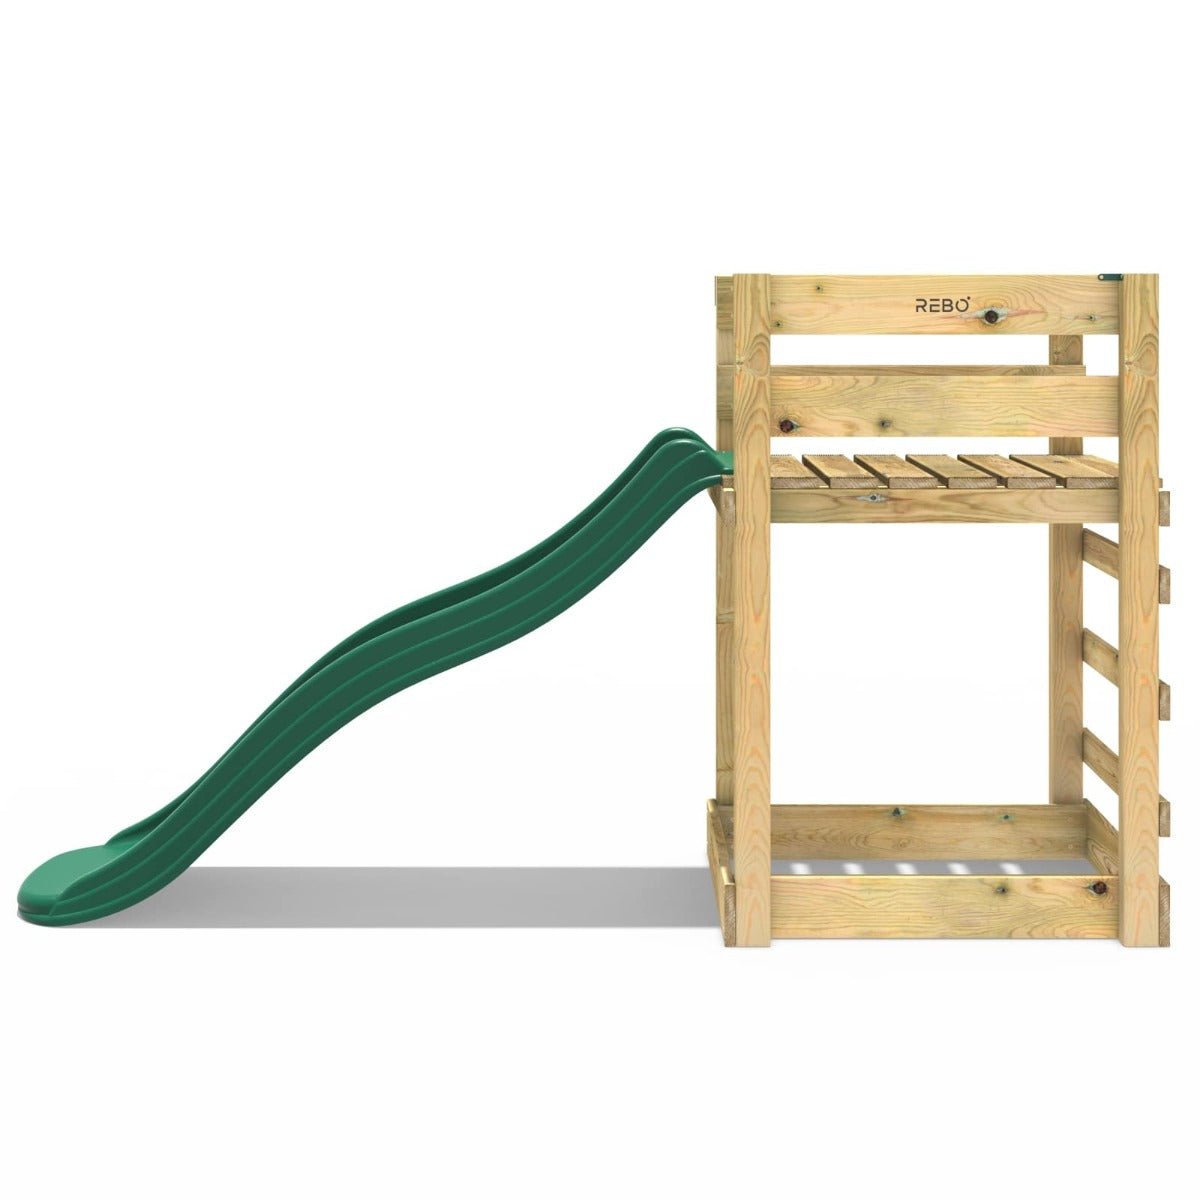 Add-on Wooden Platform with 6FT Slide for Rebo Wooden Garden Swing Sets